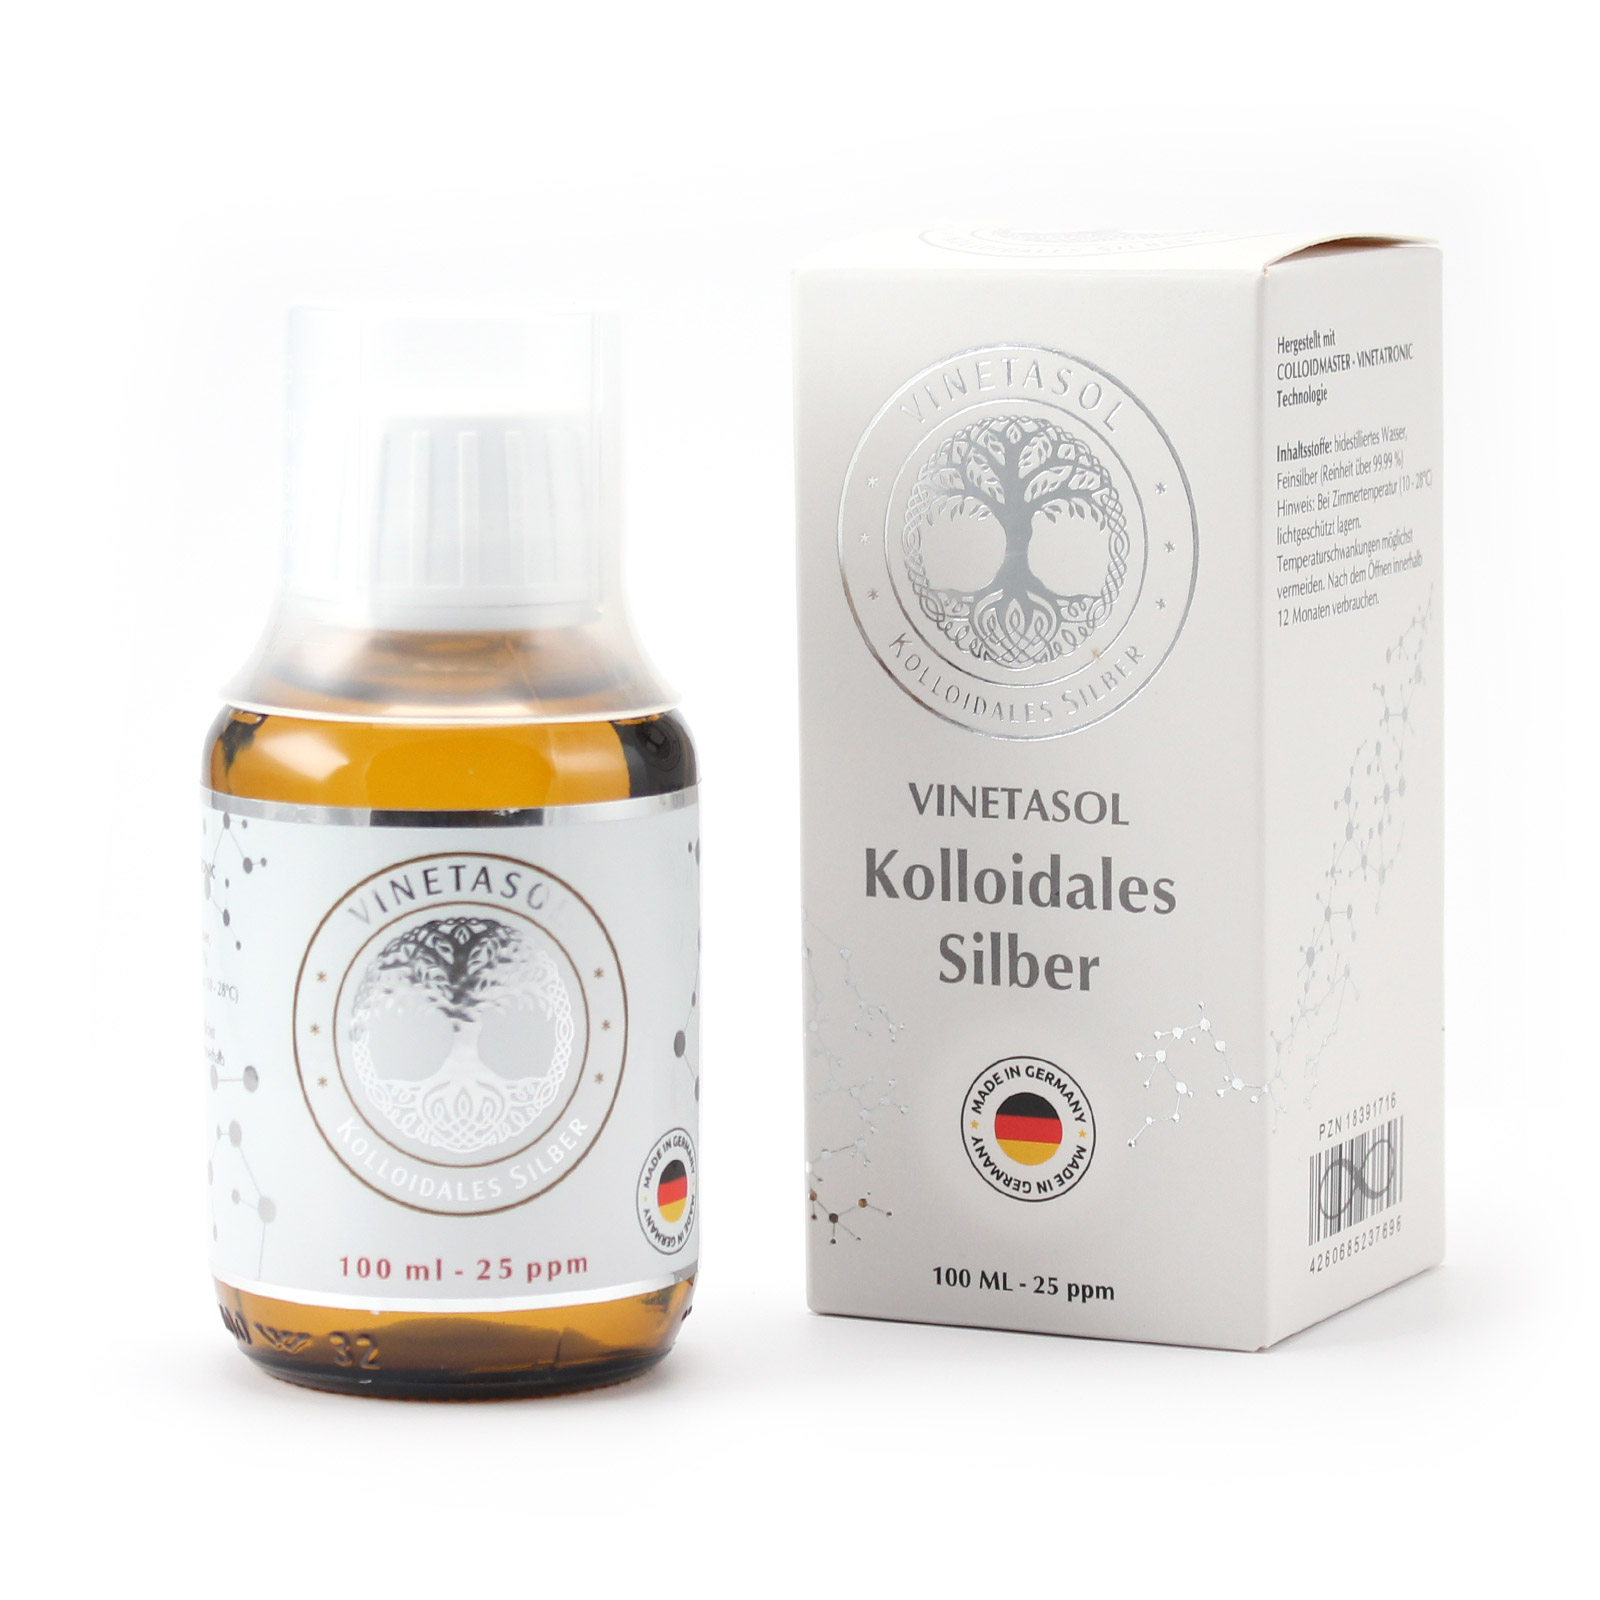 VINETASOL - Kolloidales Silber 25 ppm / 100 ml 